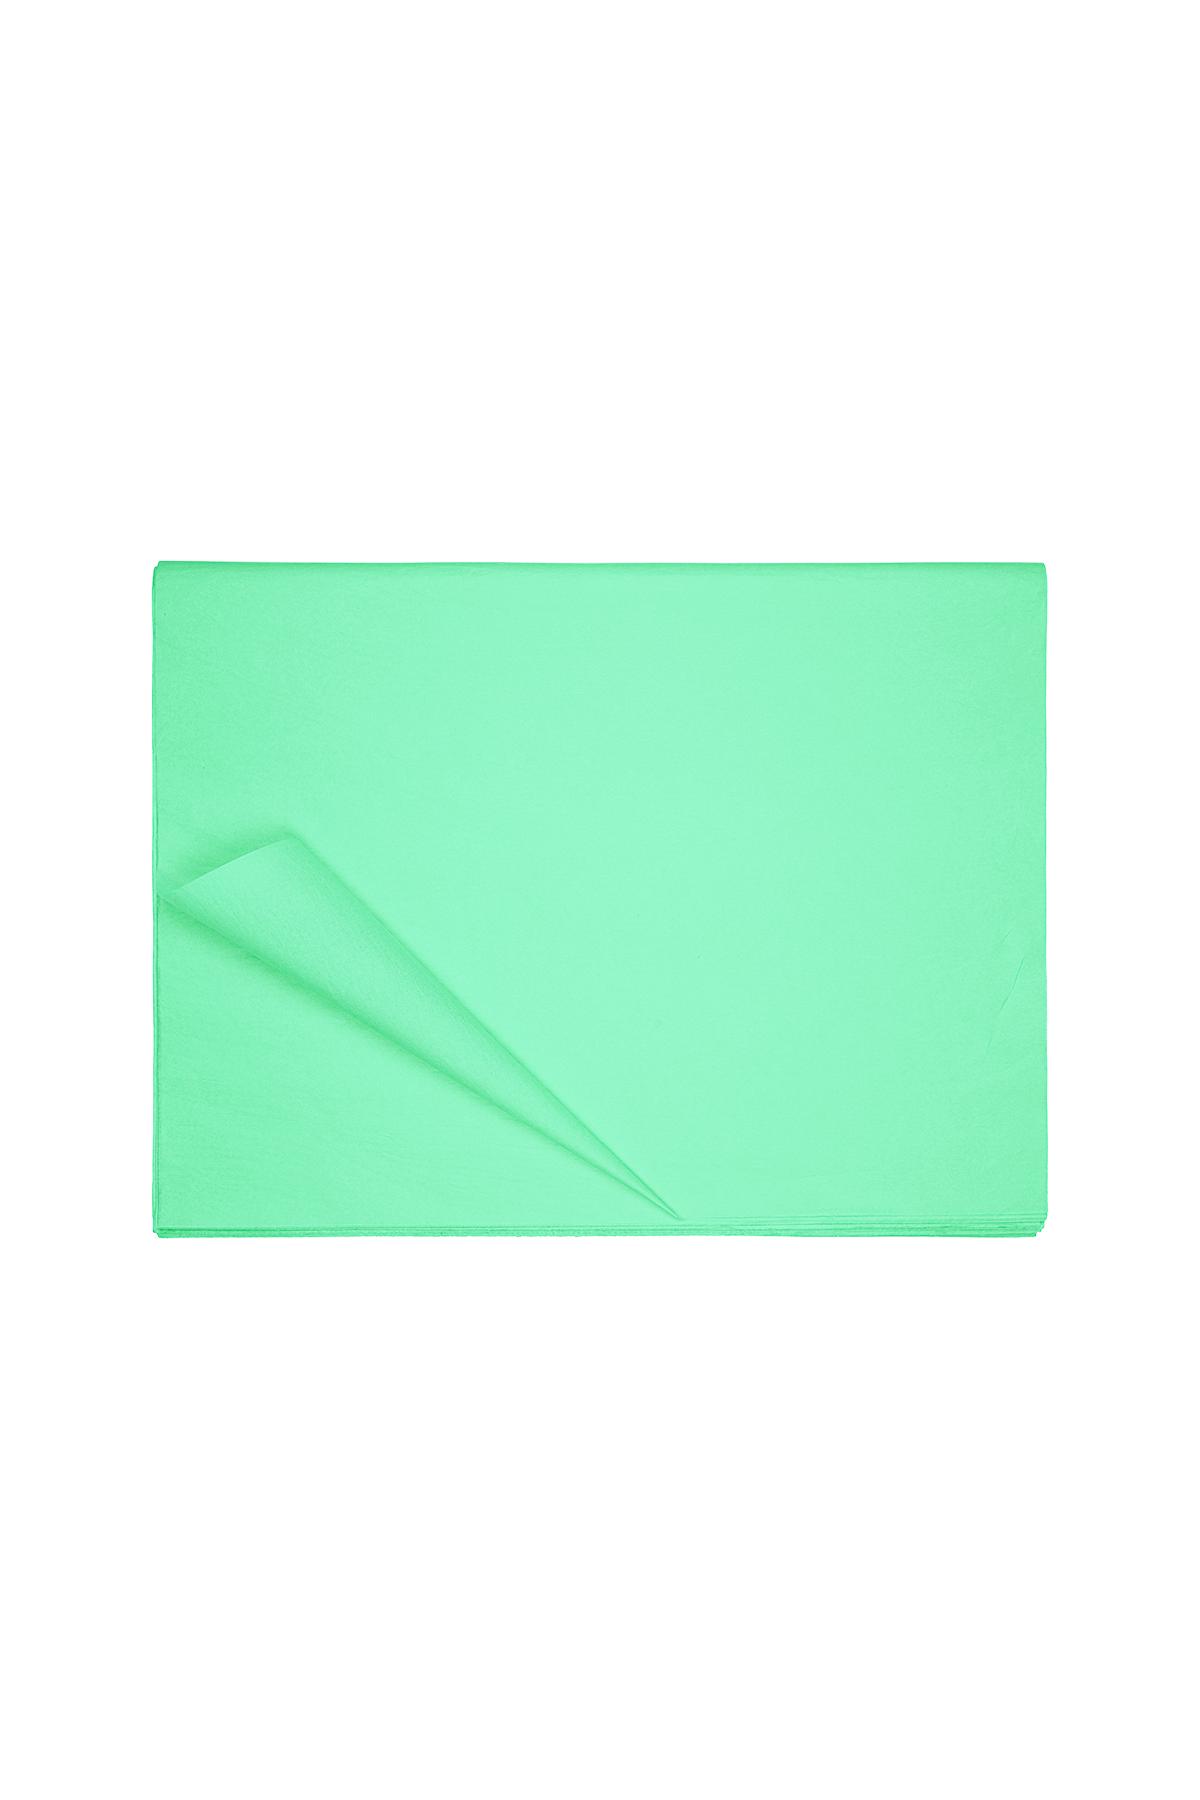 Tissue paper Green 